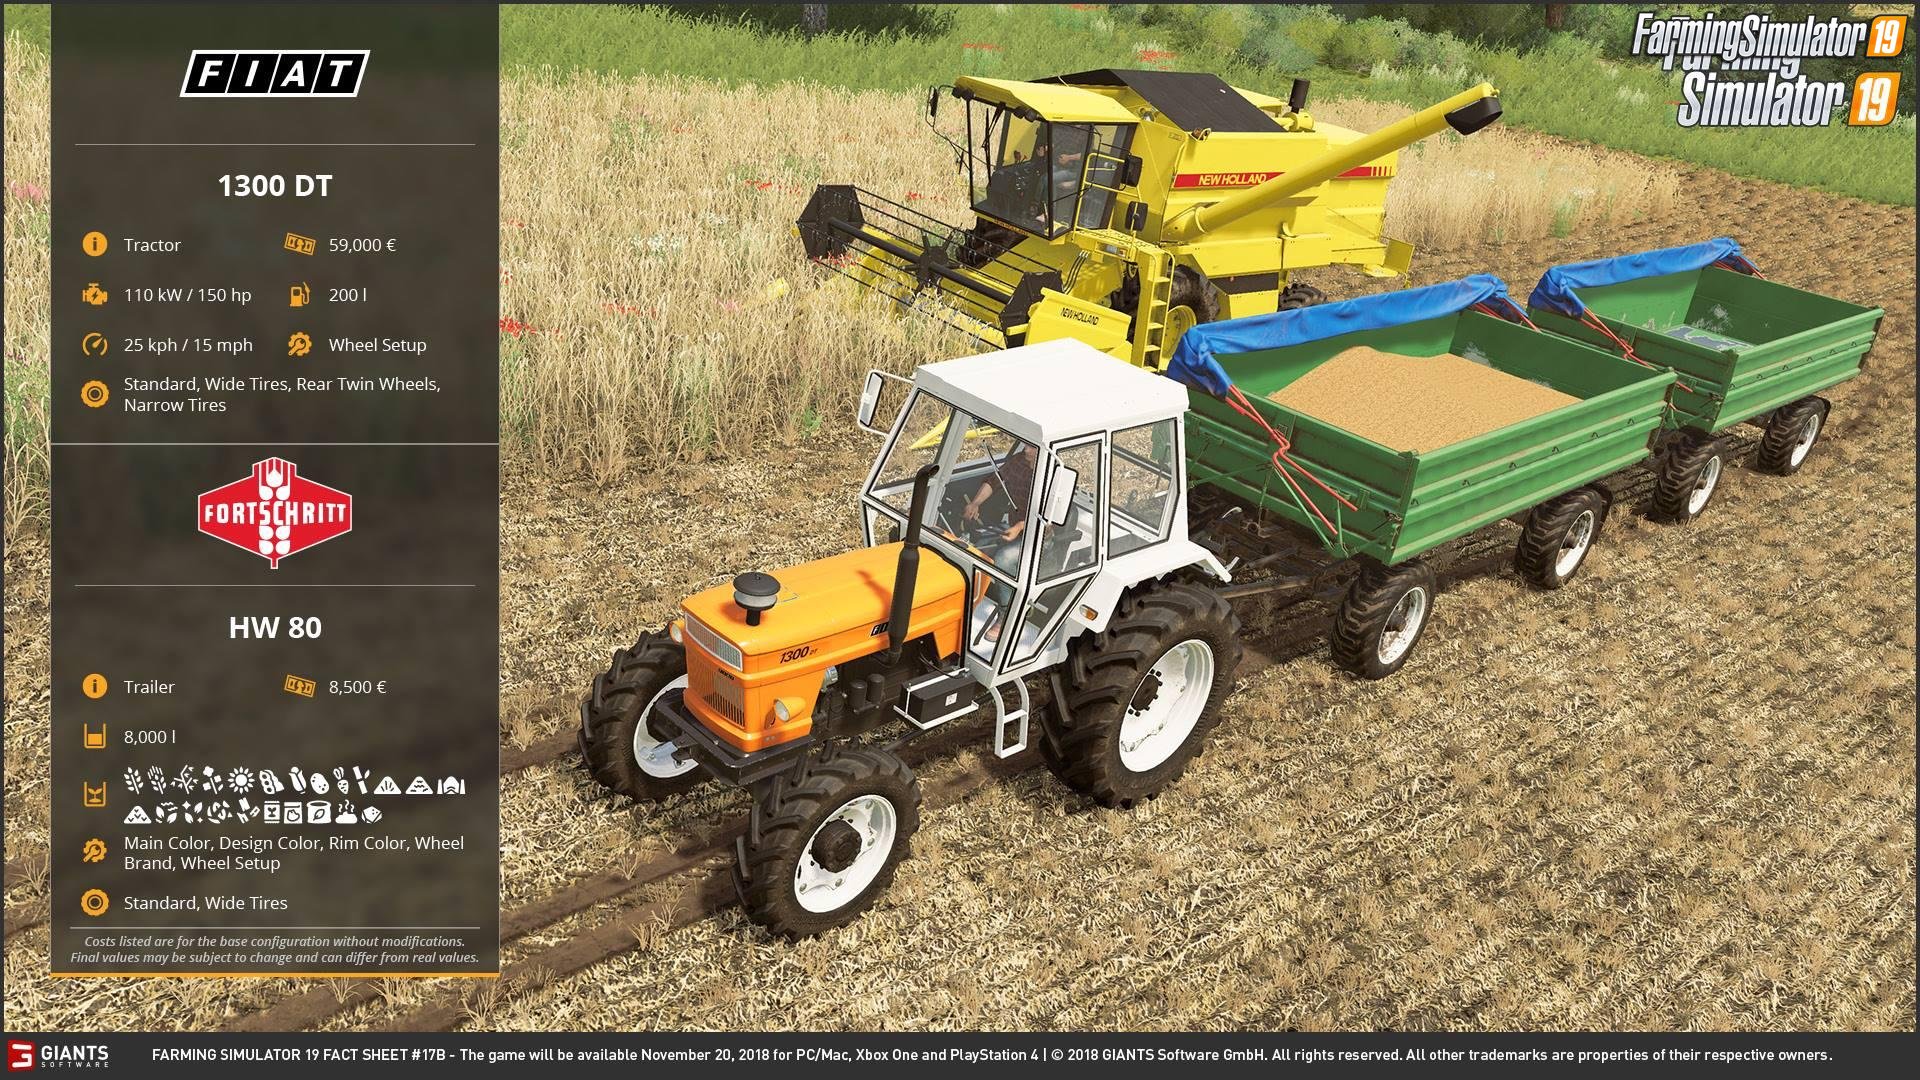 Farming simulator 19 FACT SHEET #8 by Giants Software